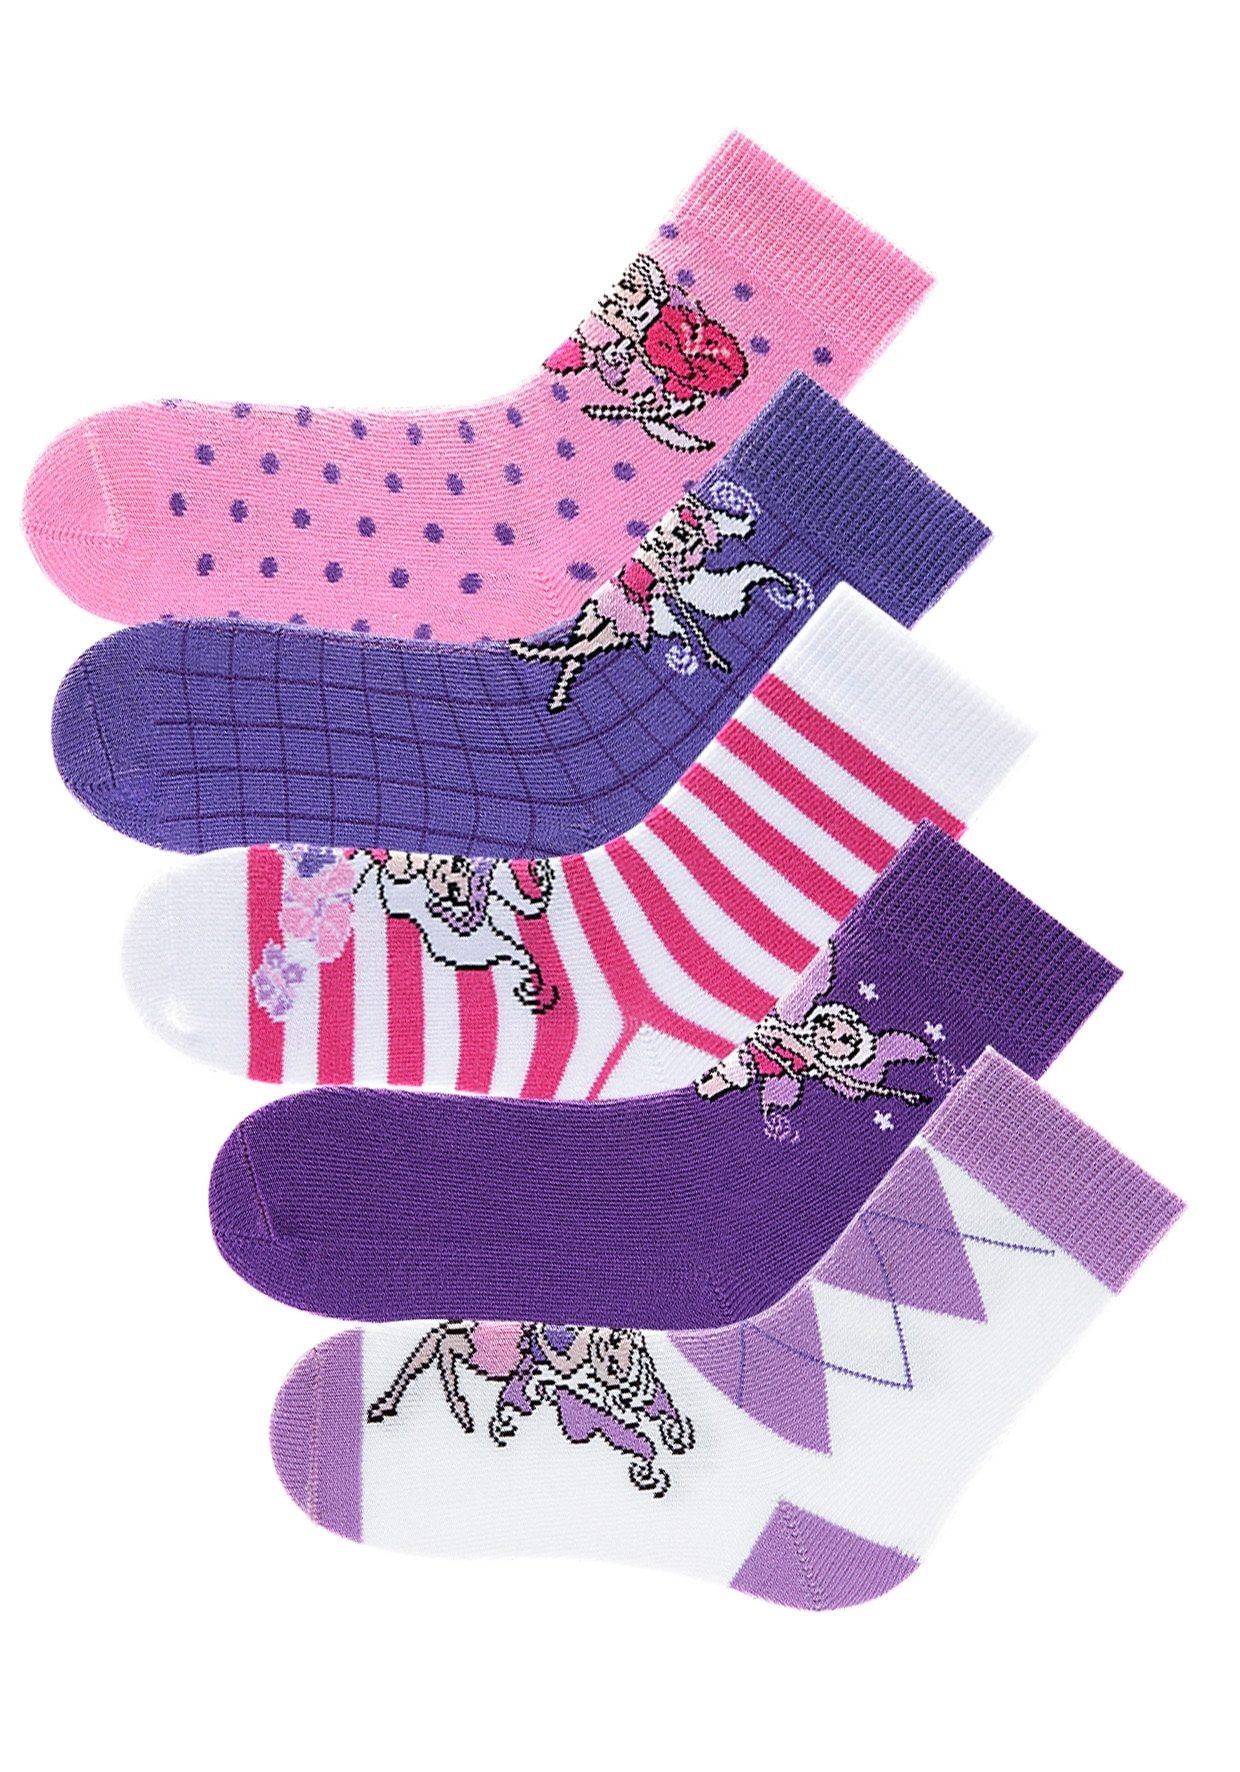 Socken, (Packung, 5 Paar), in 5 farbenfrohen Designs